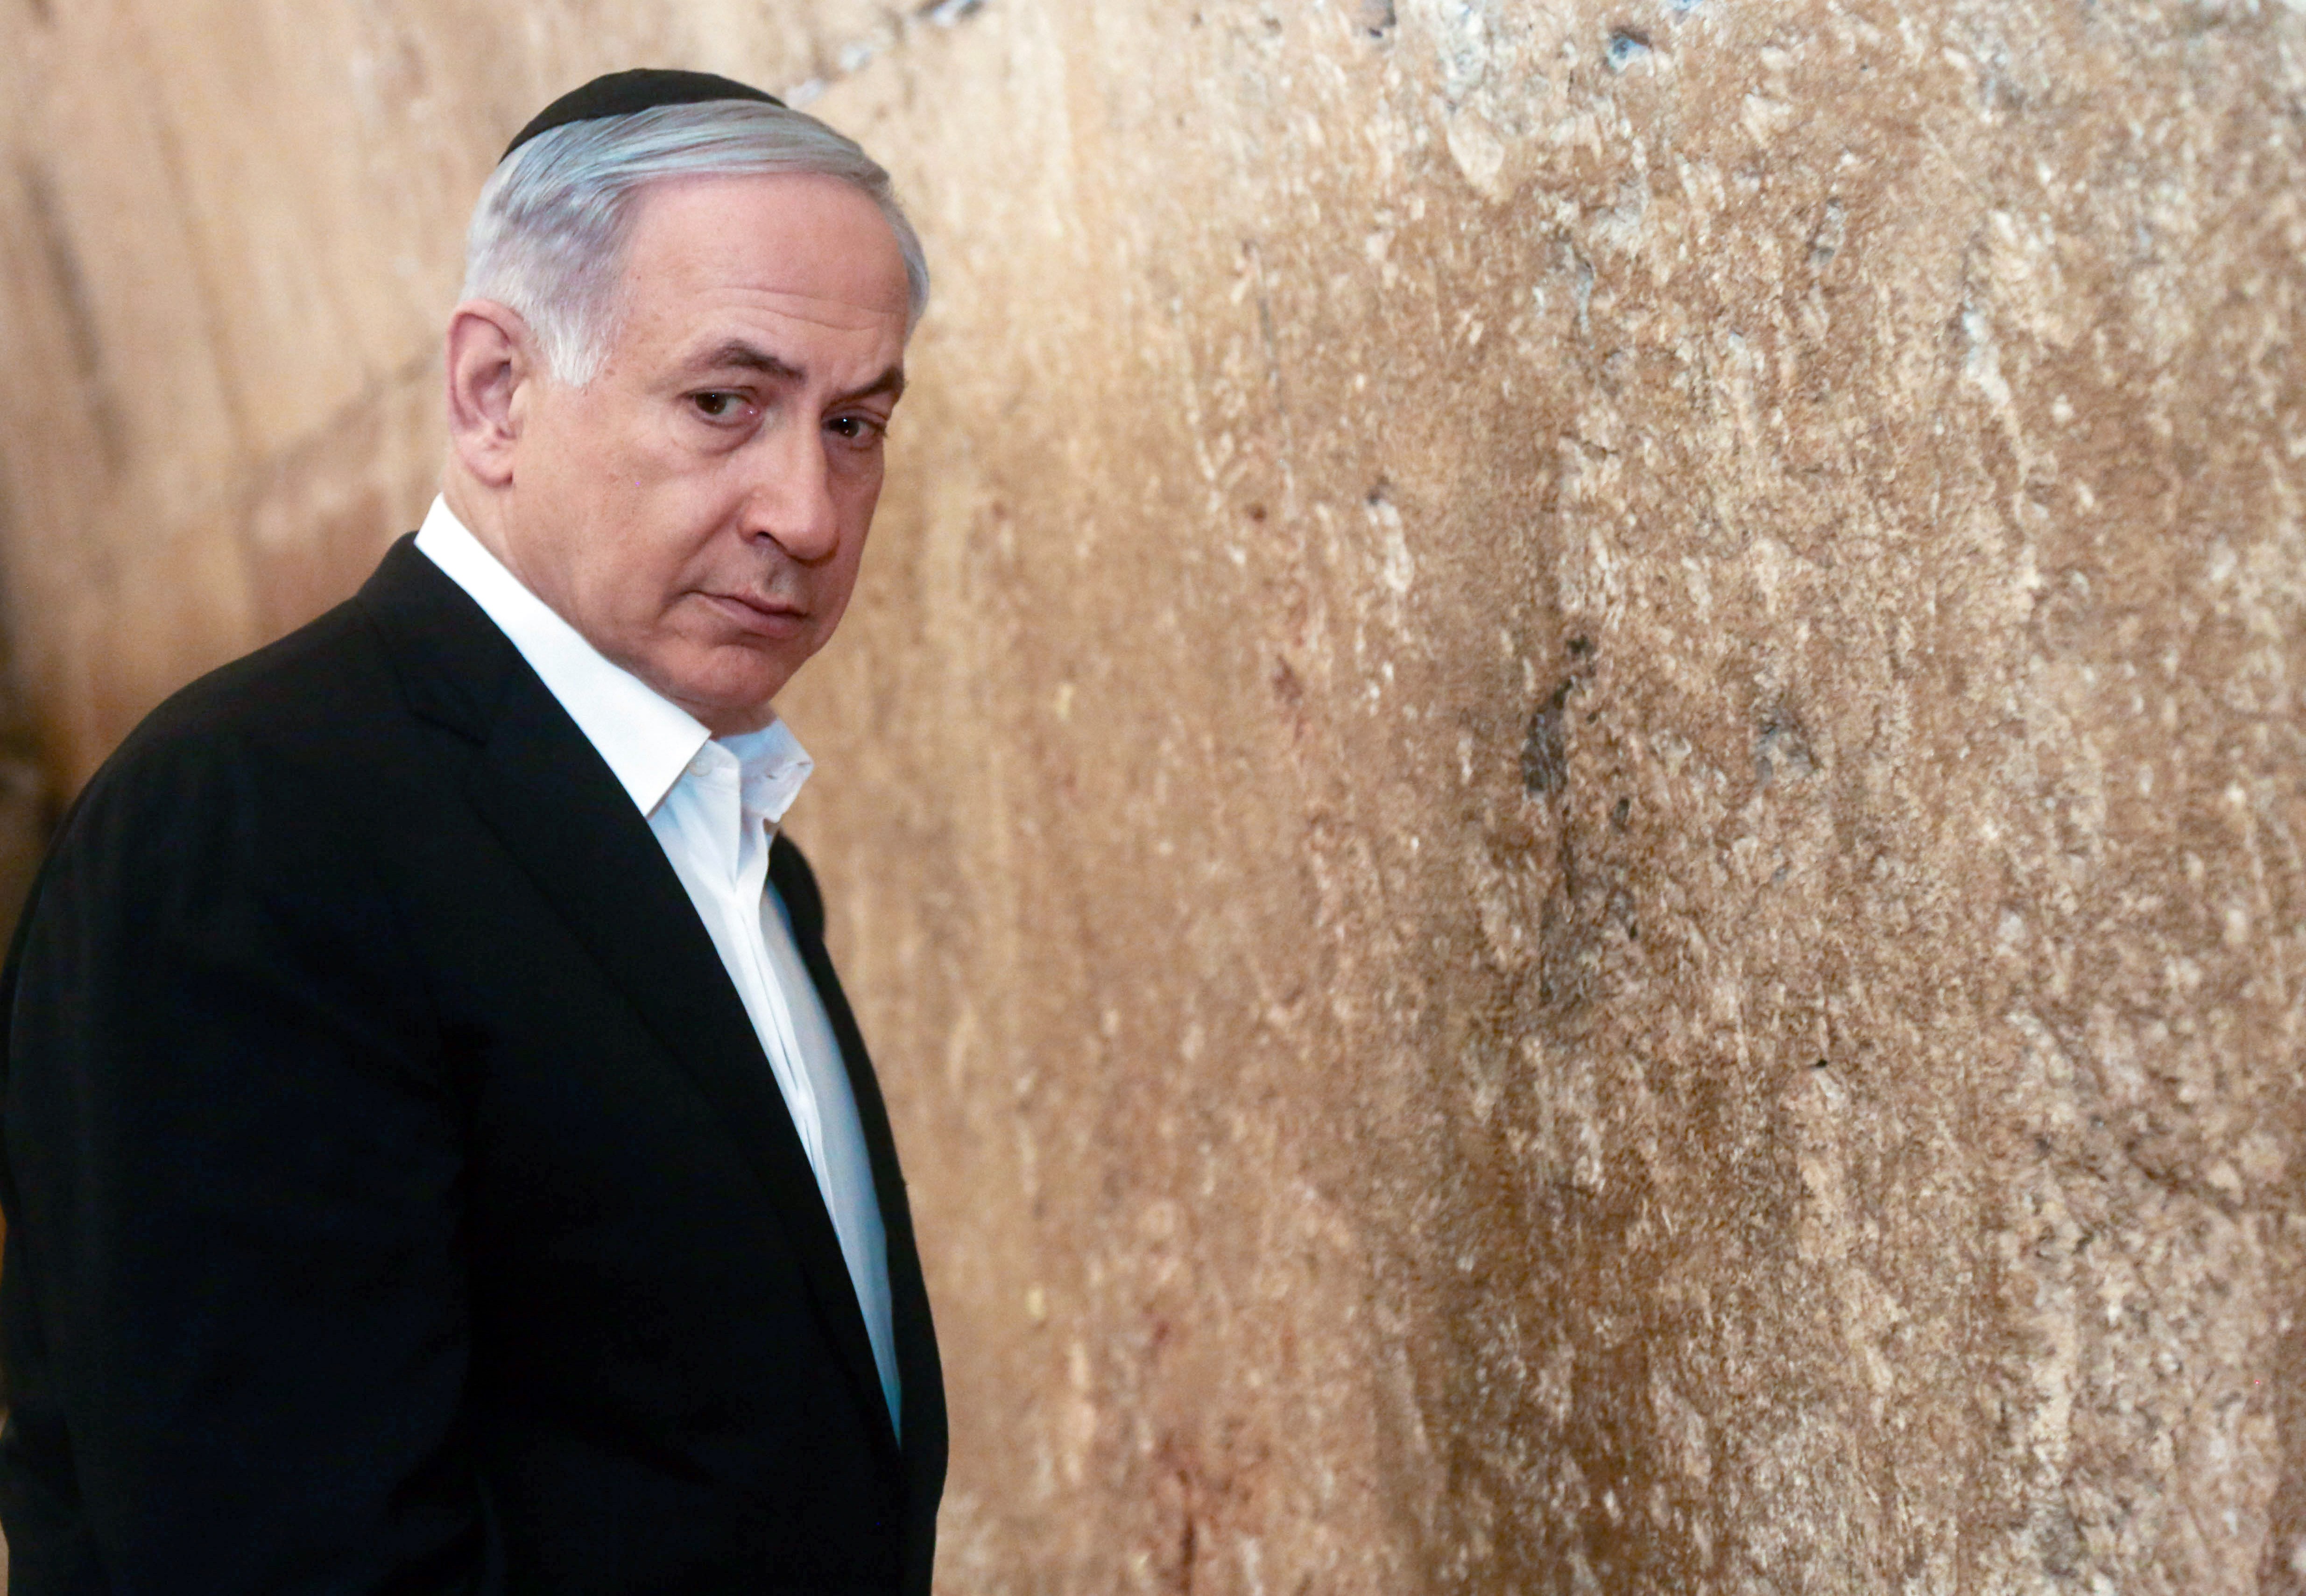 Israeli Prime Minister Bejamin Netanyahu stands before the Western Wall in Jerusalem.